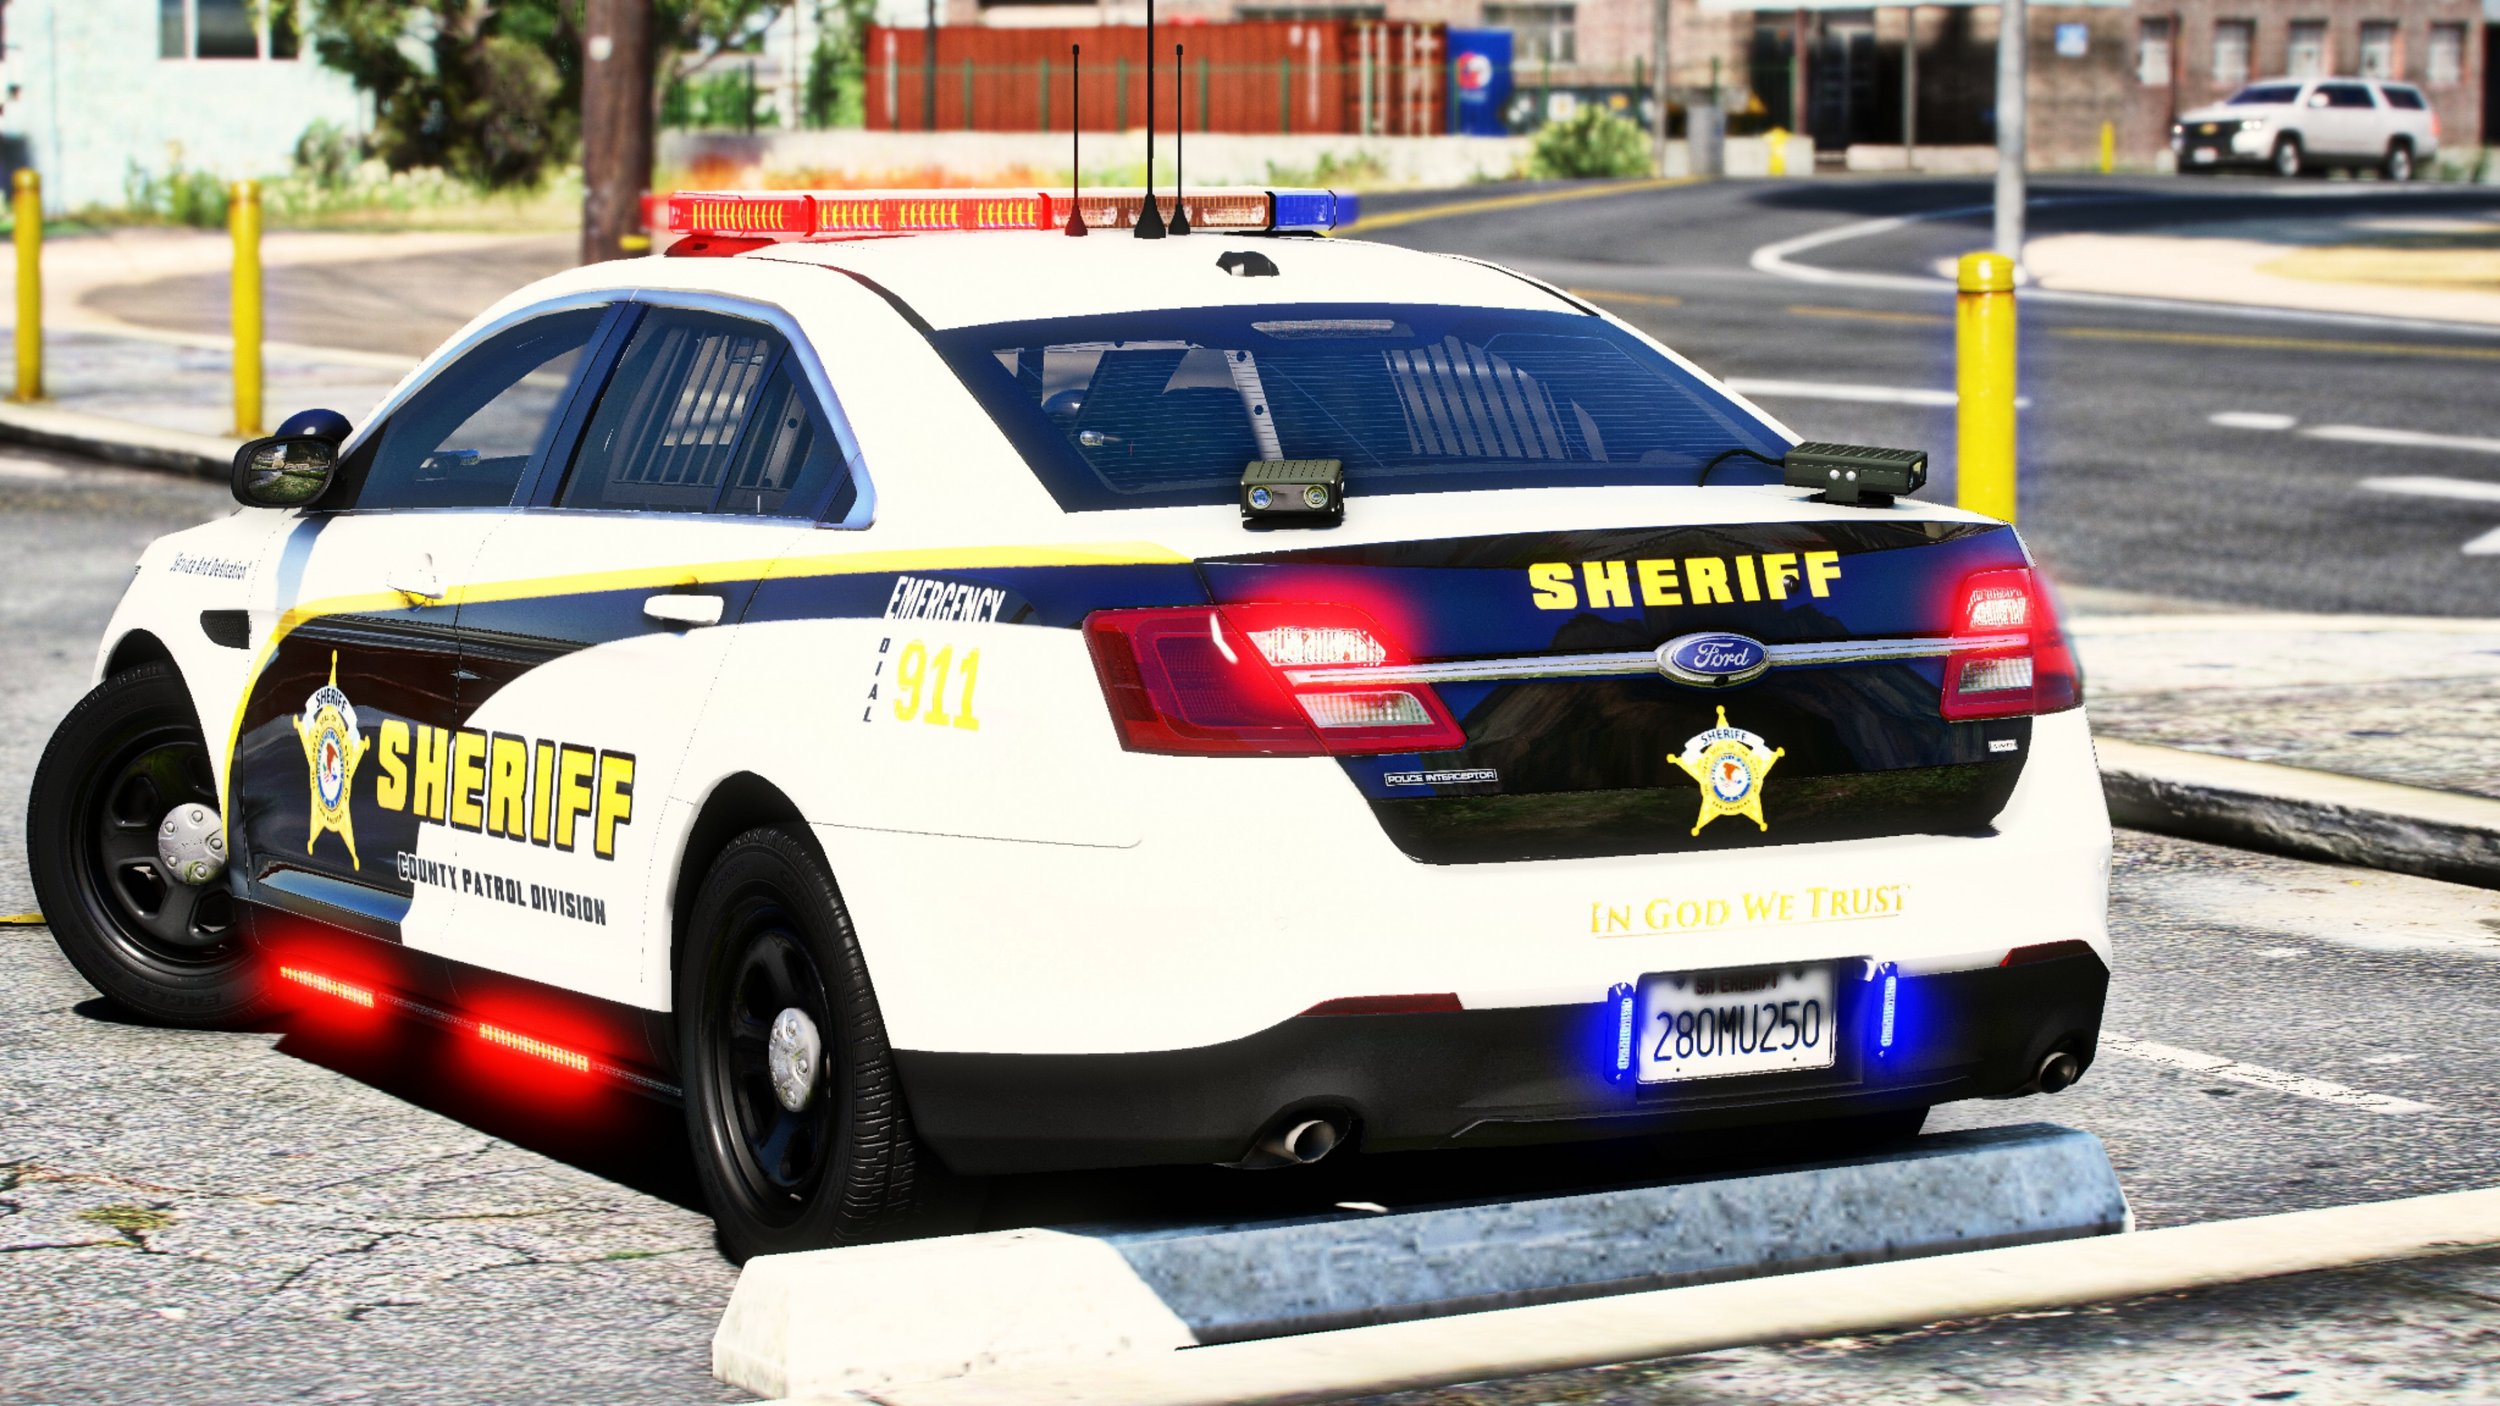 County Sheriff Pack — Emergency Distributors